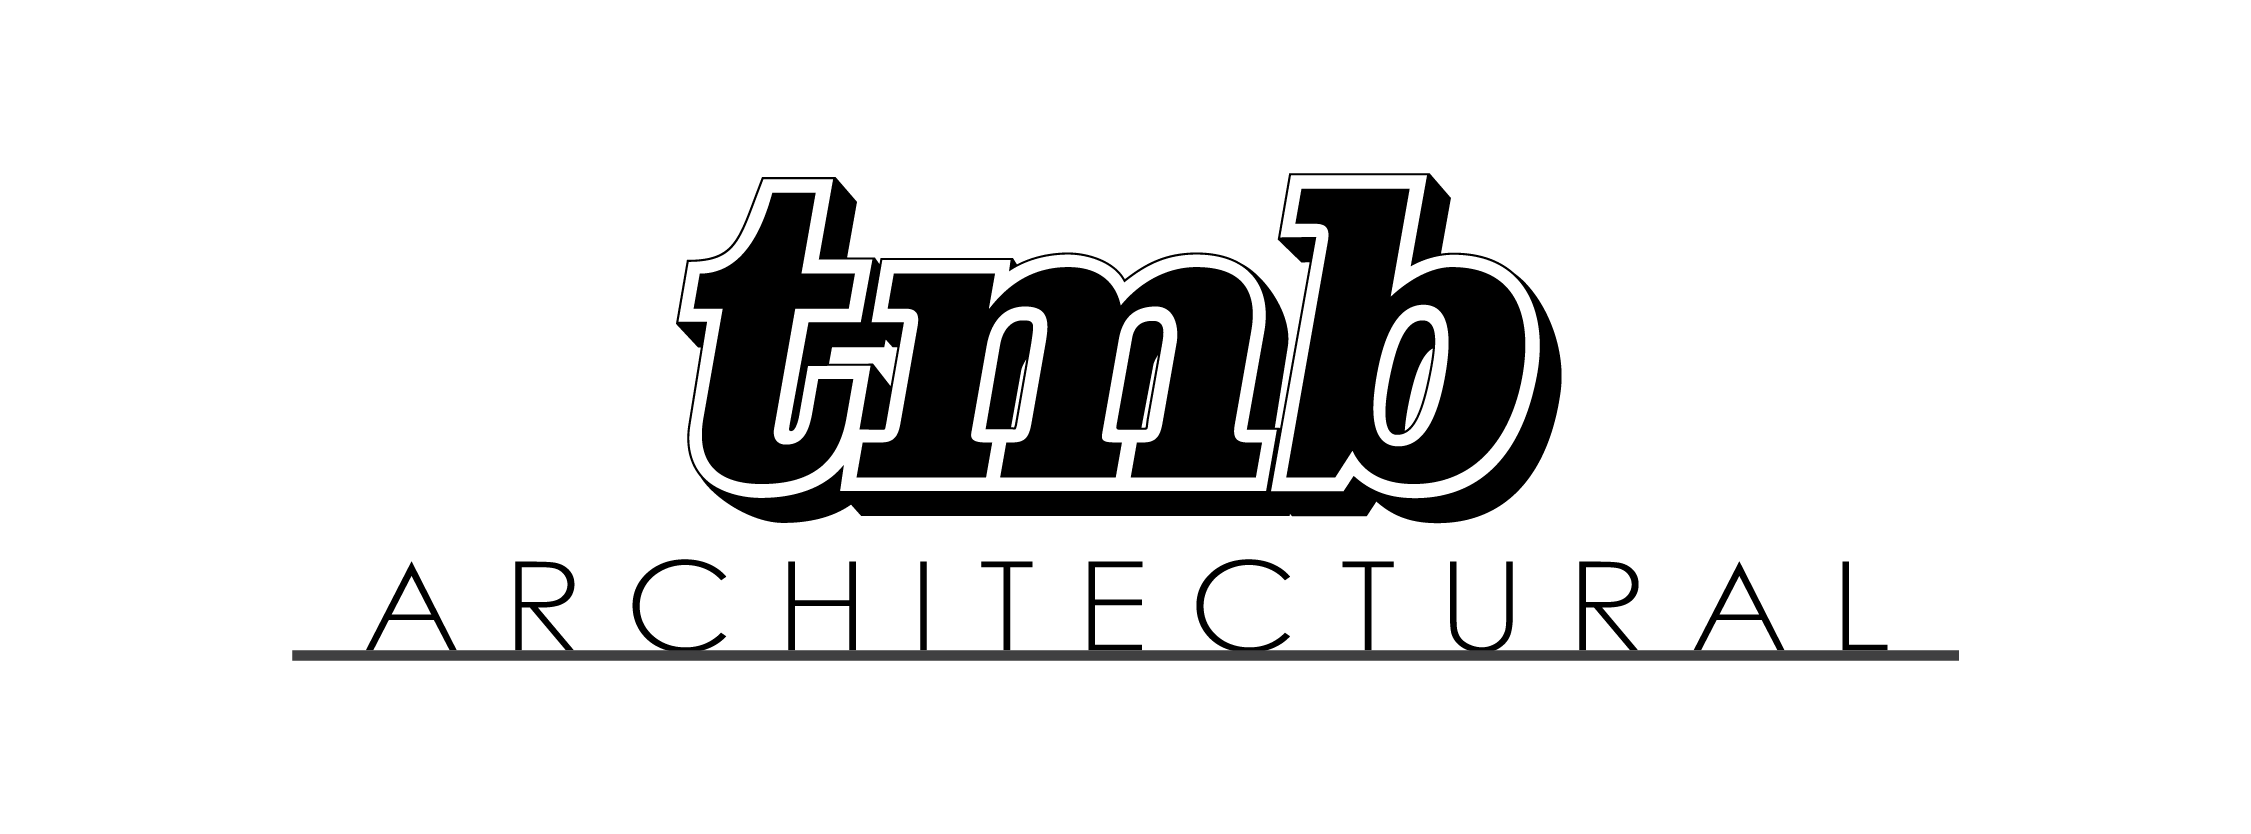 1 TMBARCH Logos-01.png